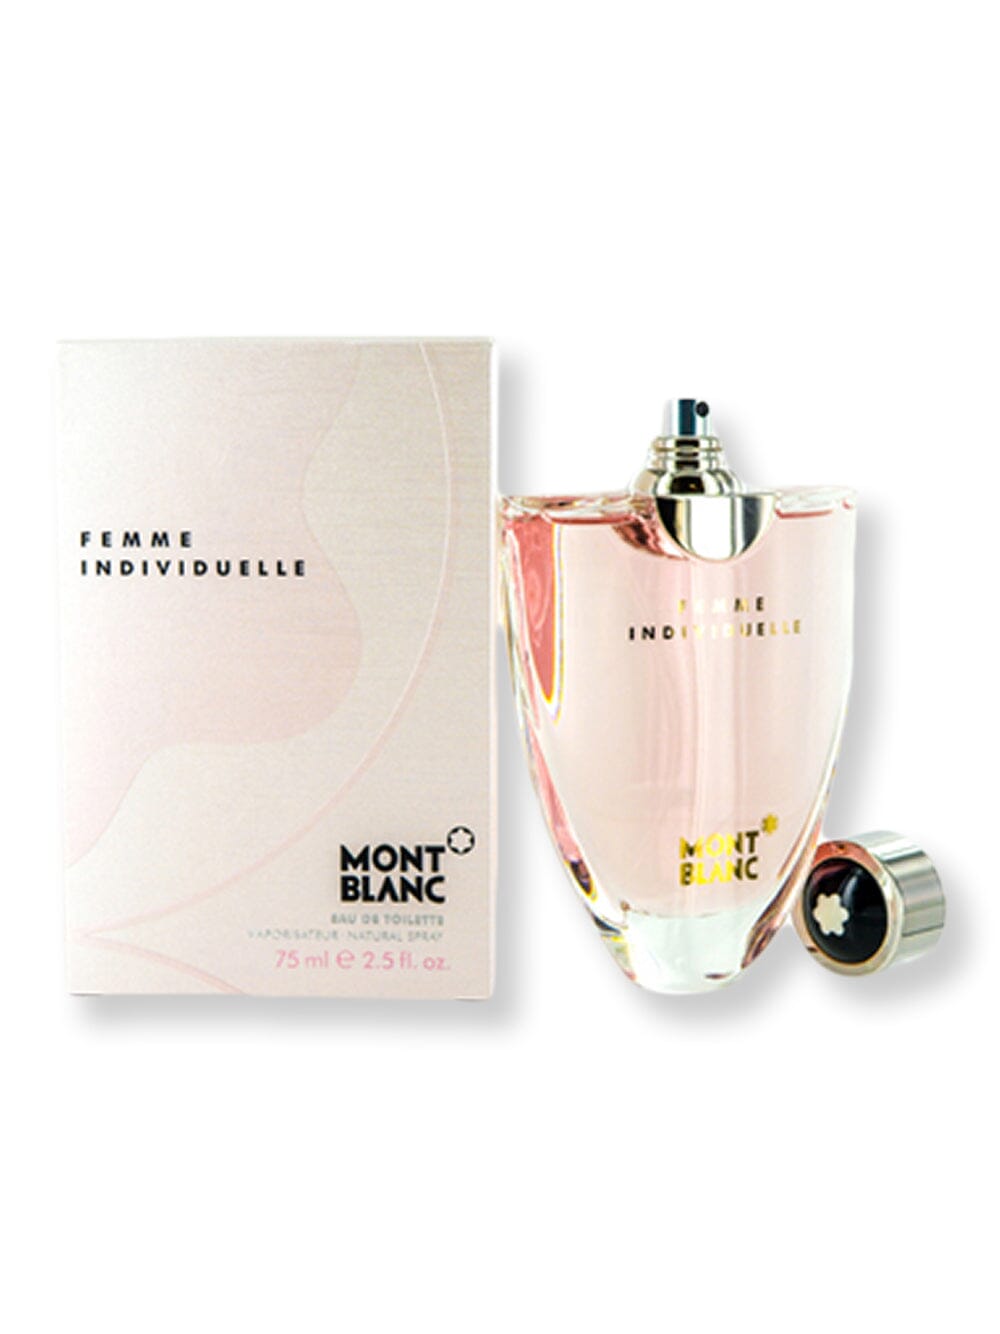 Montblanc Montblanc Femme Individuelle EDT Spray 2.5 oz Perfume 